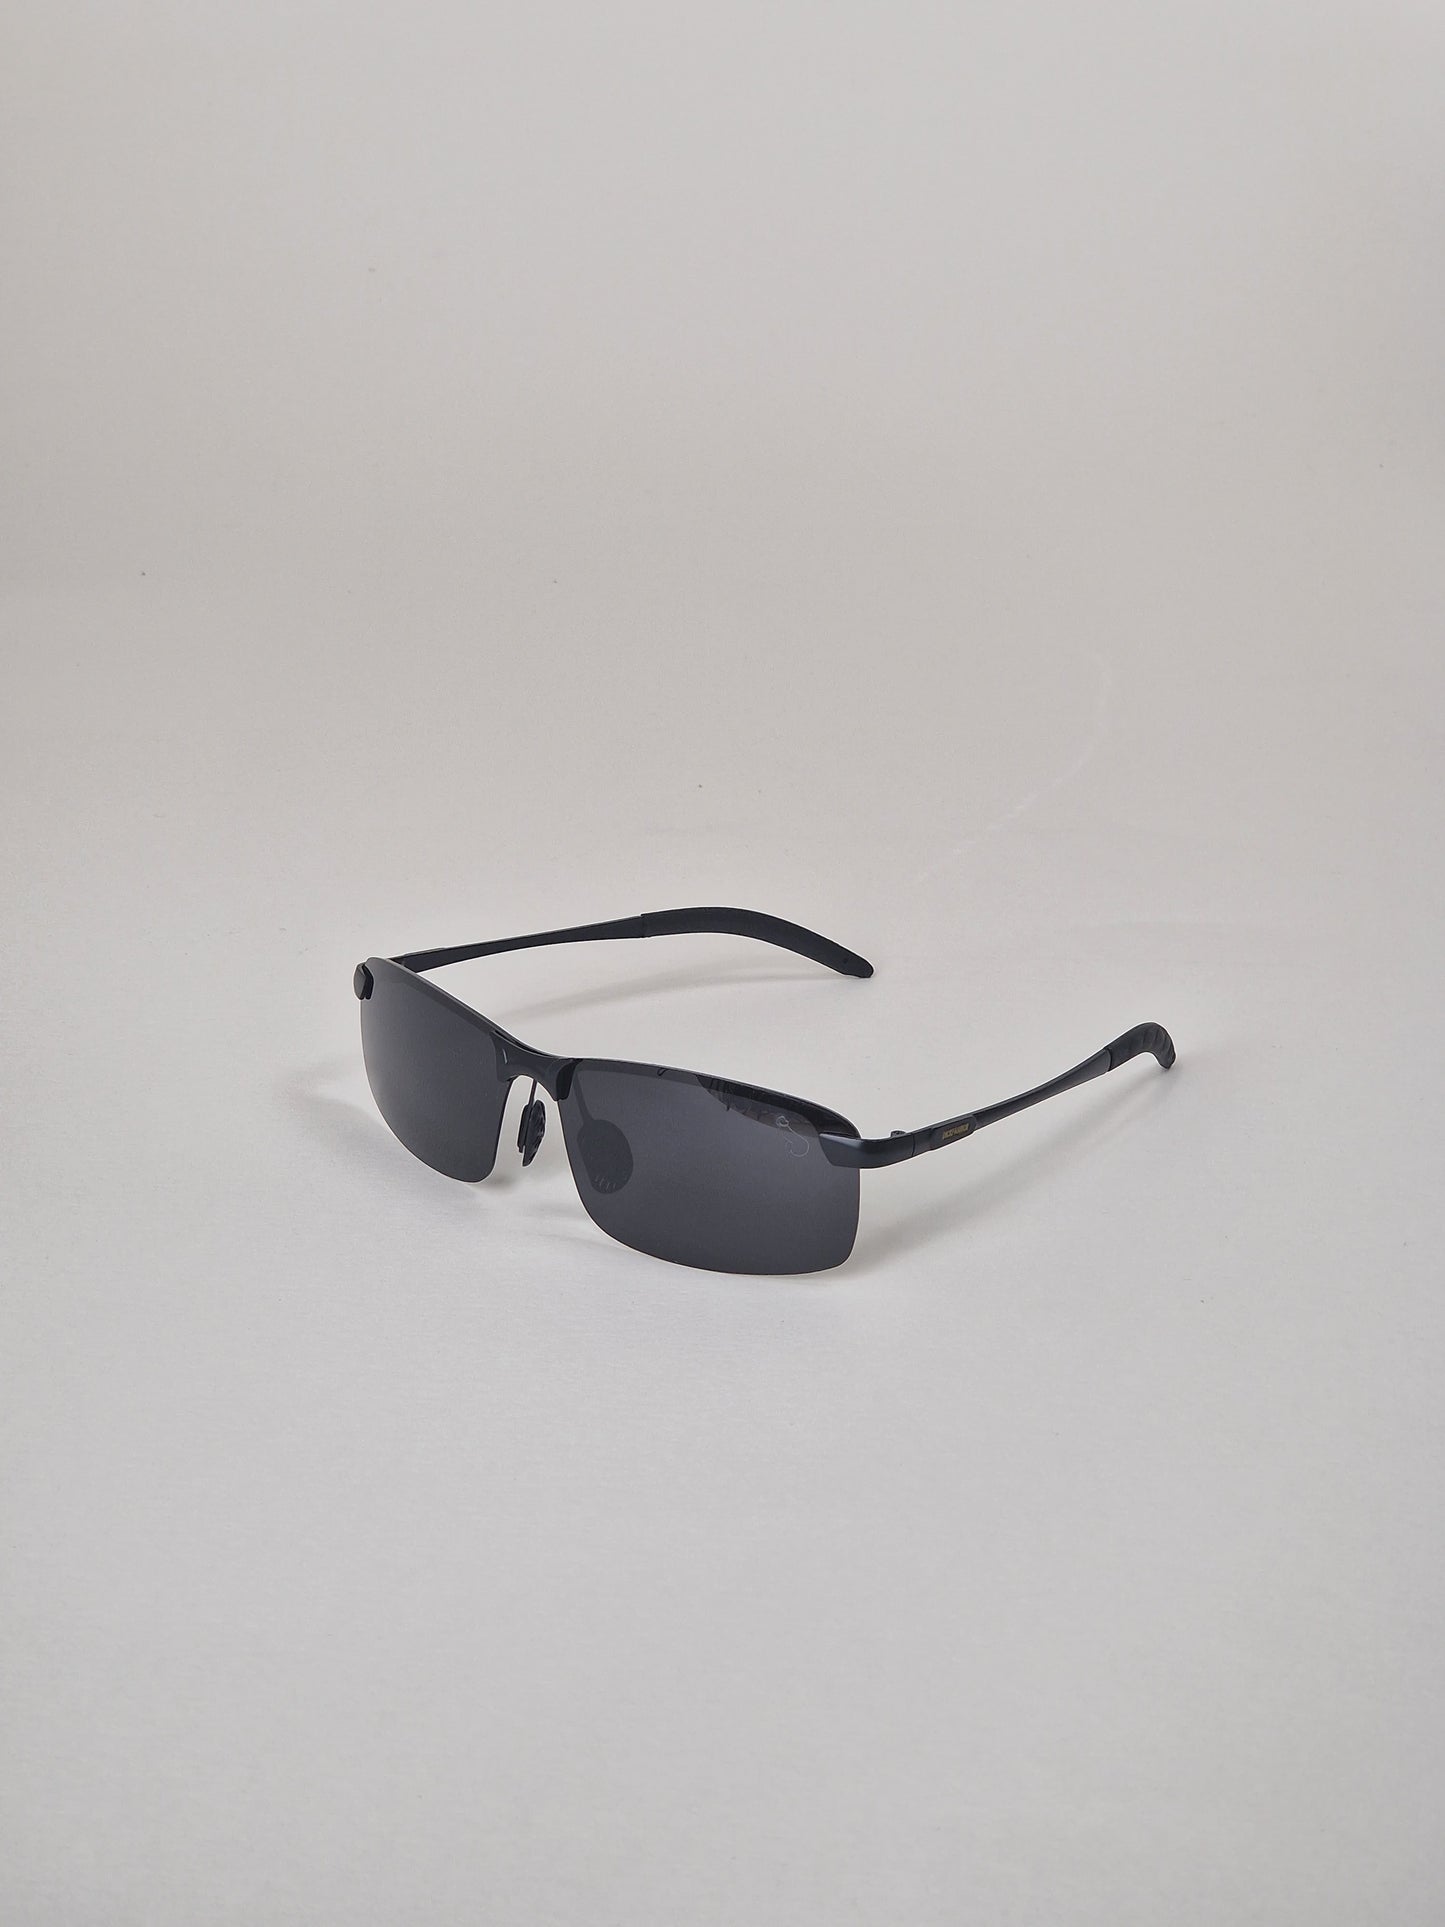 Sunglasses, model 36 - Black tinted.